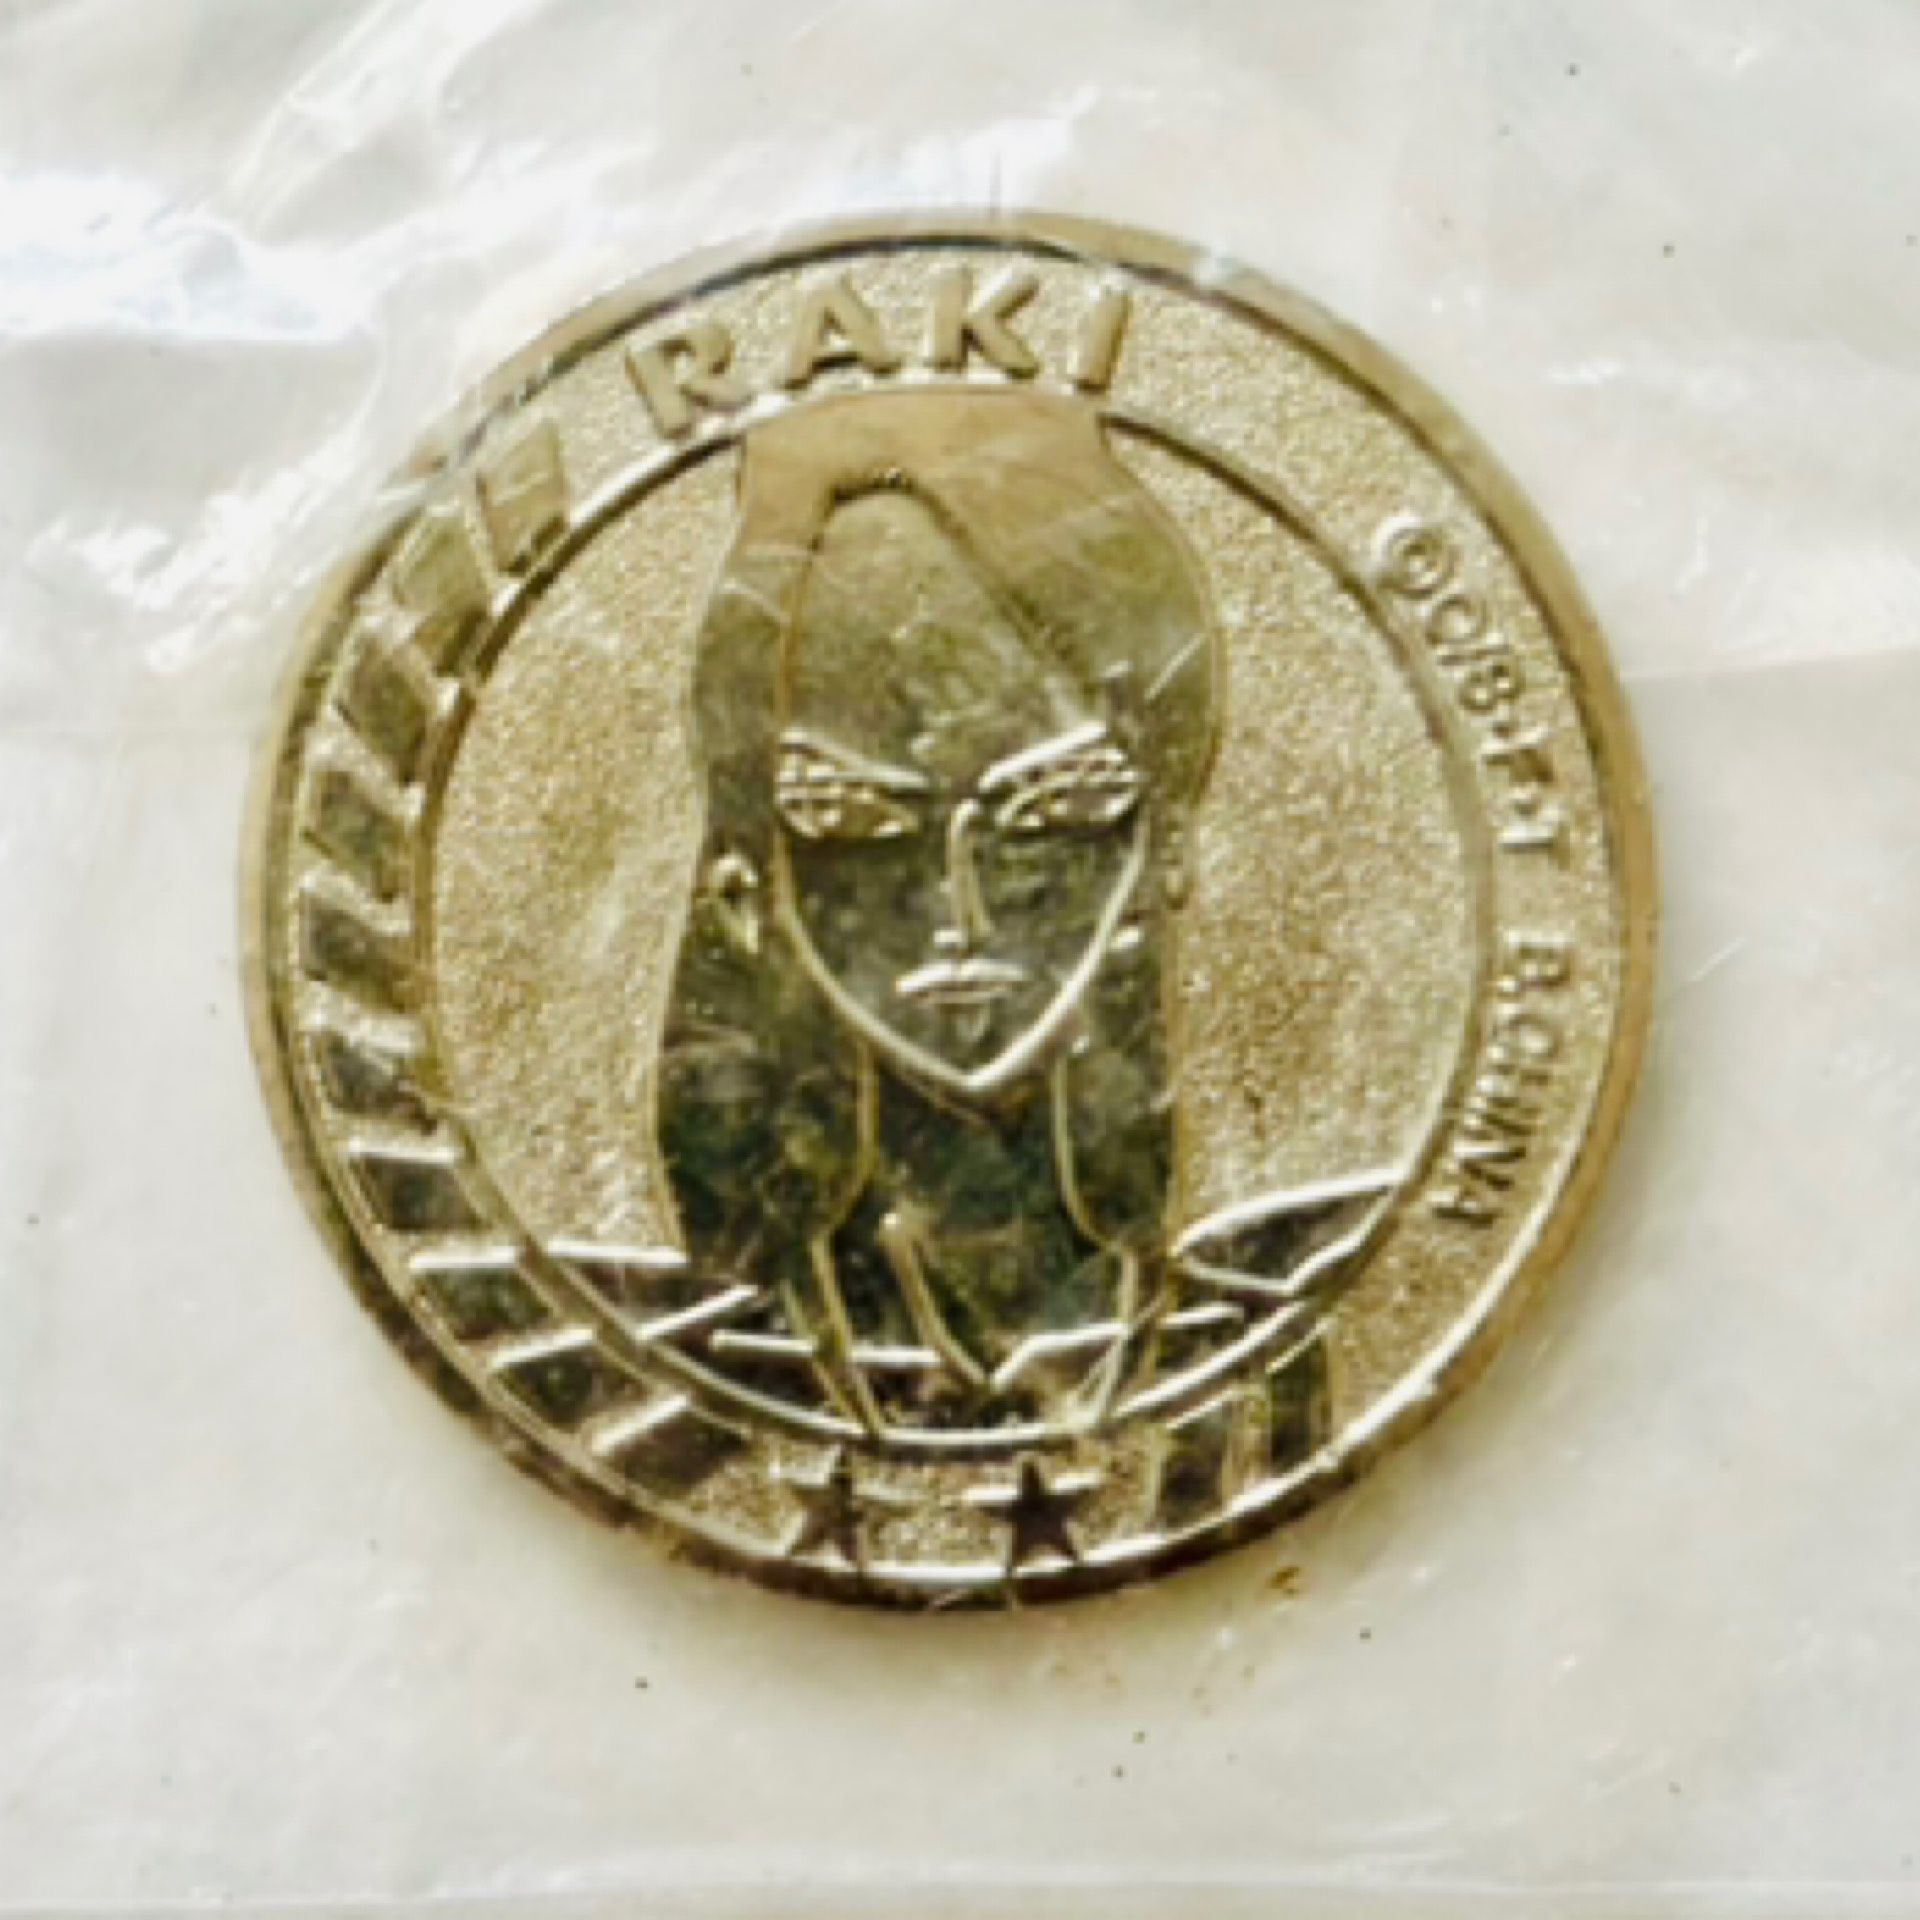 One Piece Animation Anime Raki Medal Coin Rare